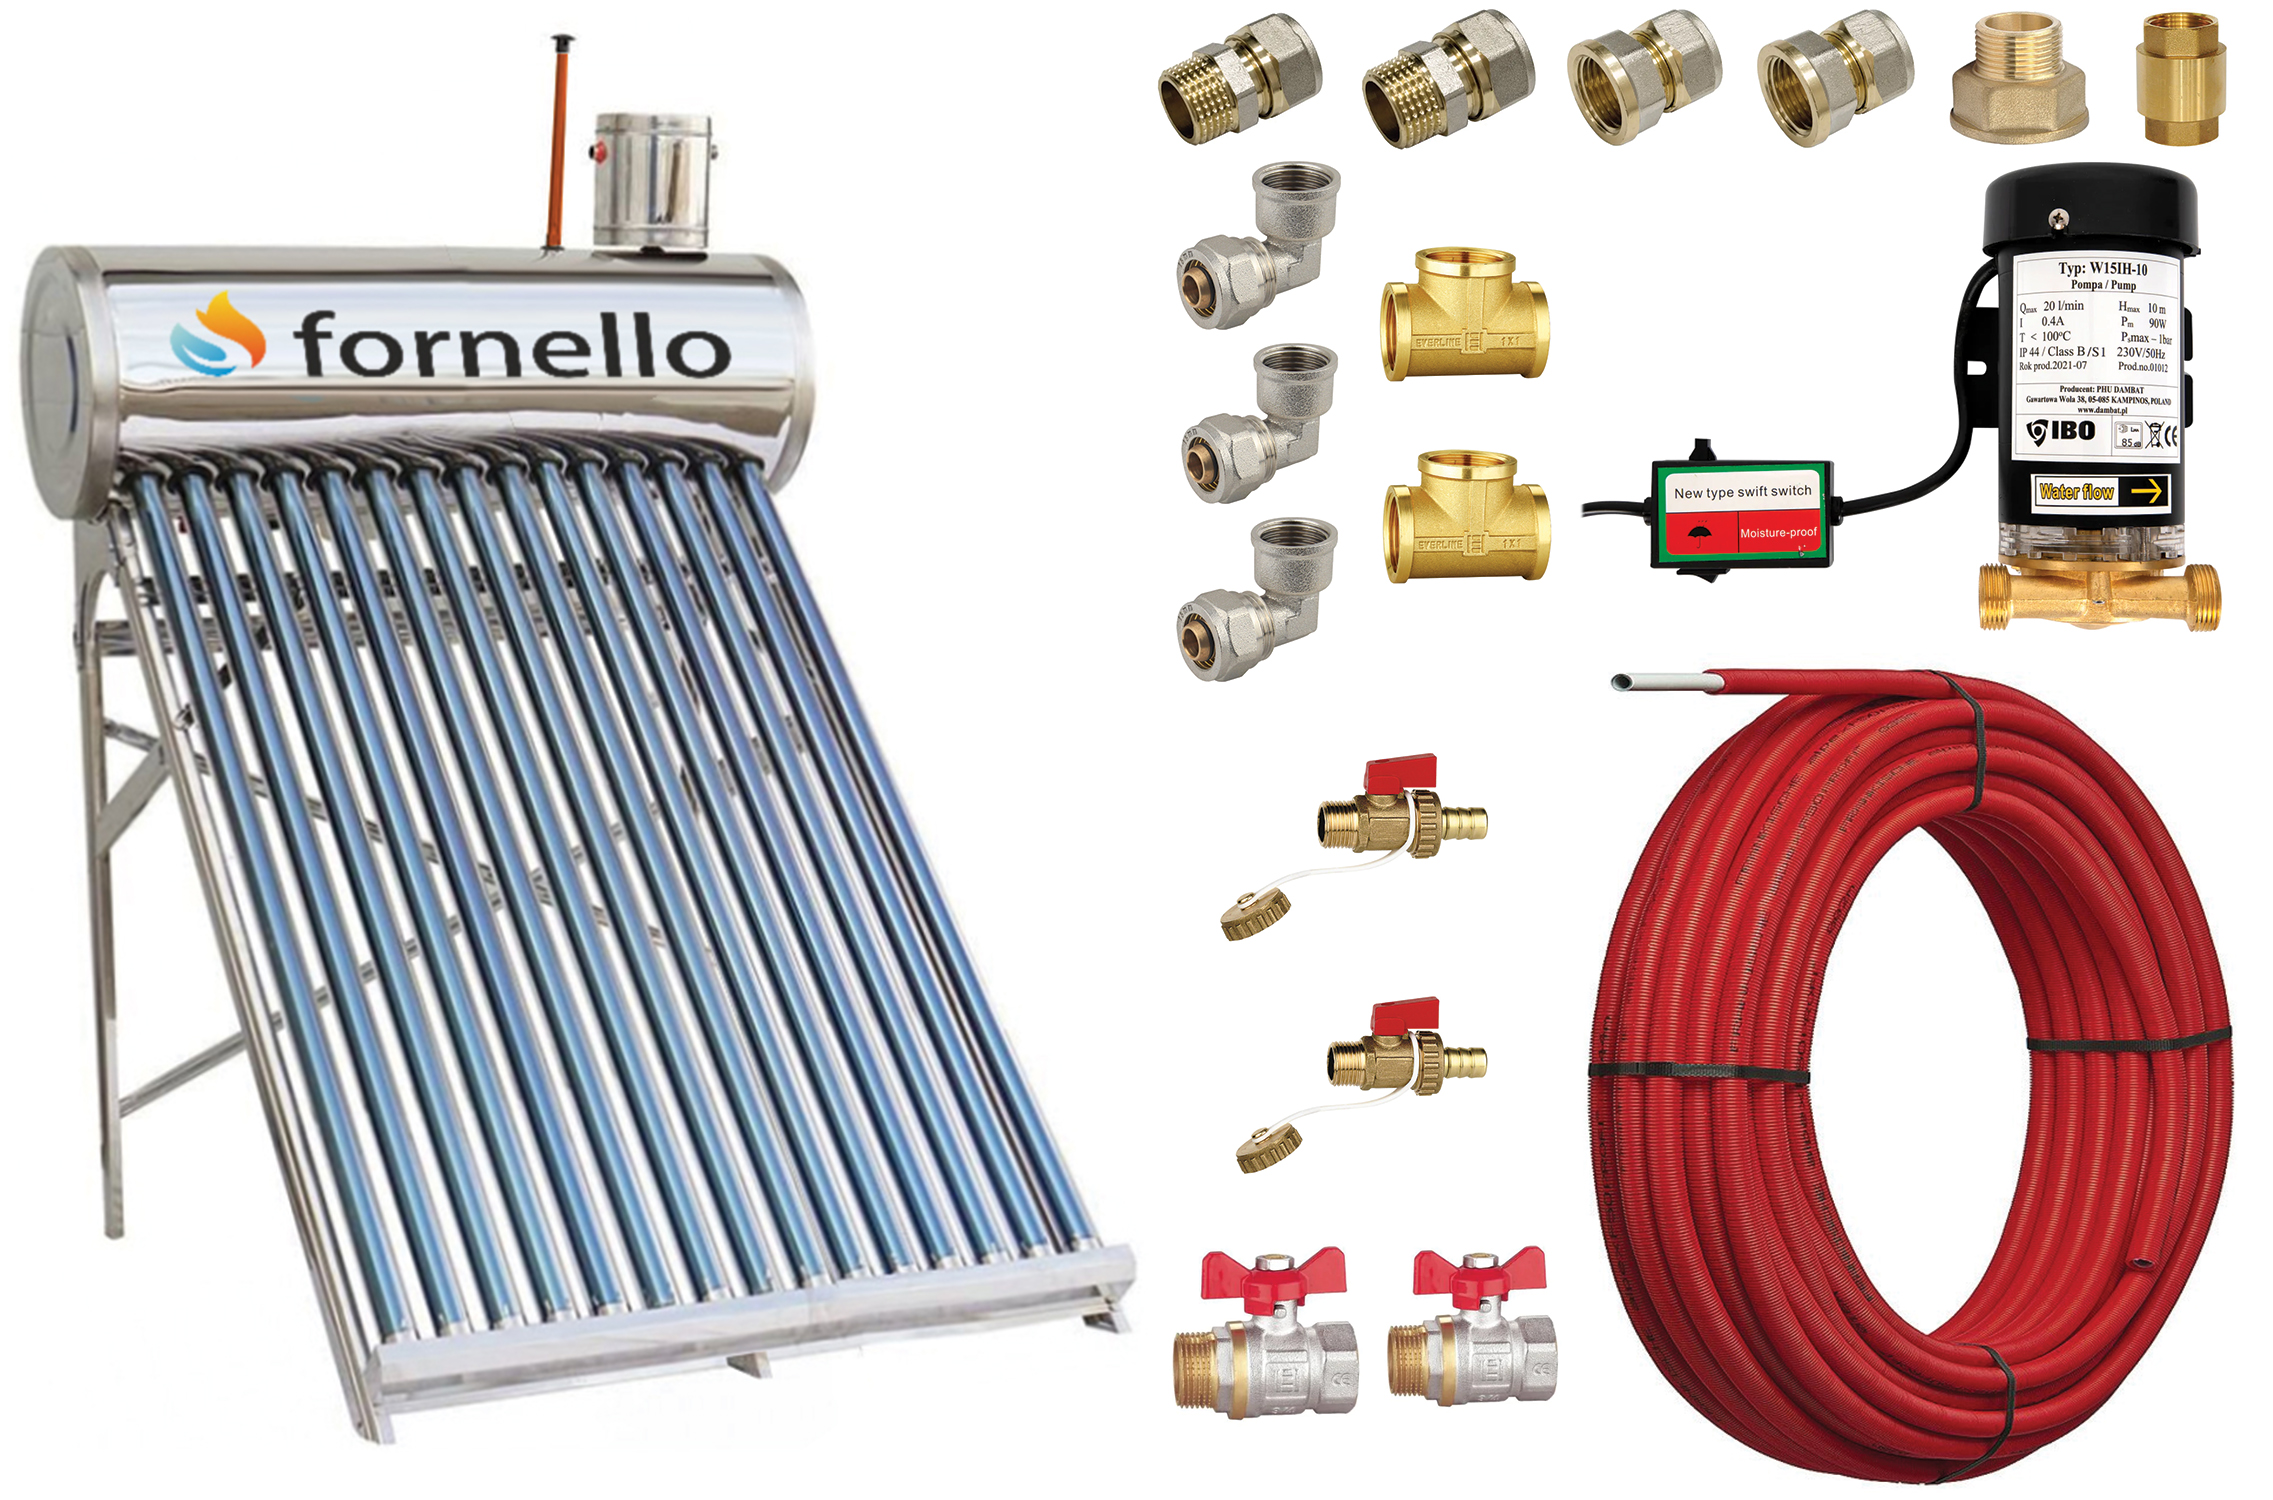 Pachet panou solar nepresurizat Fornello pentru producere apa calda, cu rezervor inox 122 litri, 15 tuburi vidate, vas flotor 5 litri, pompa ridicare presiune, teava hidronix si fitinguri montaj Fornello